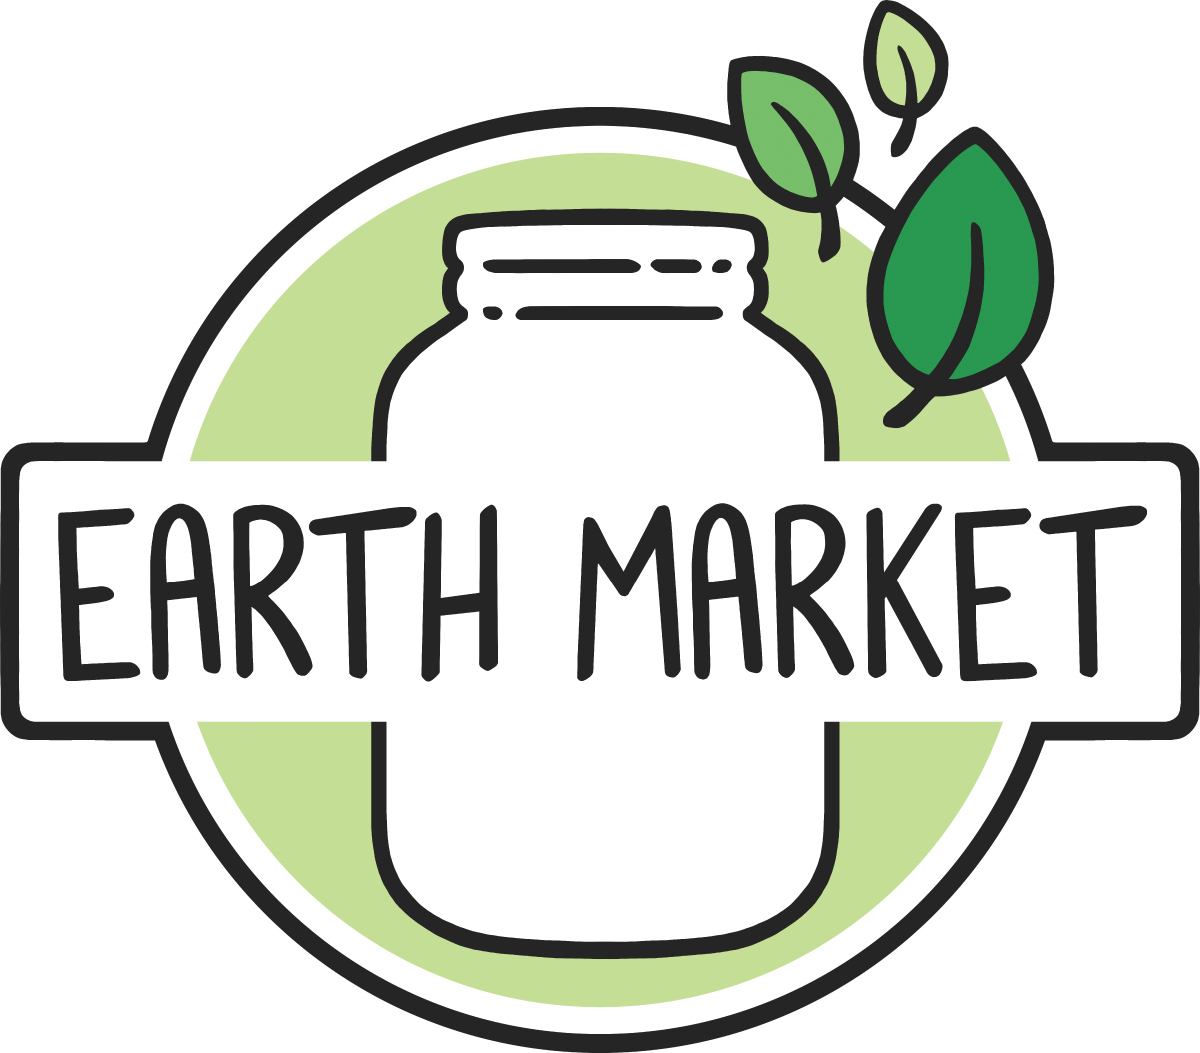 Earth Market logo